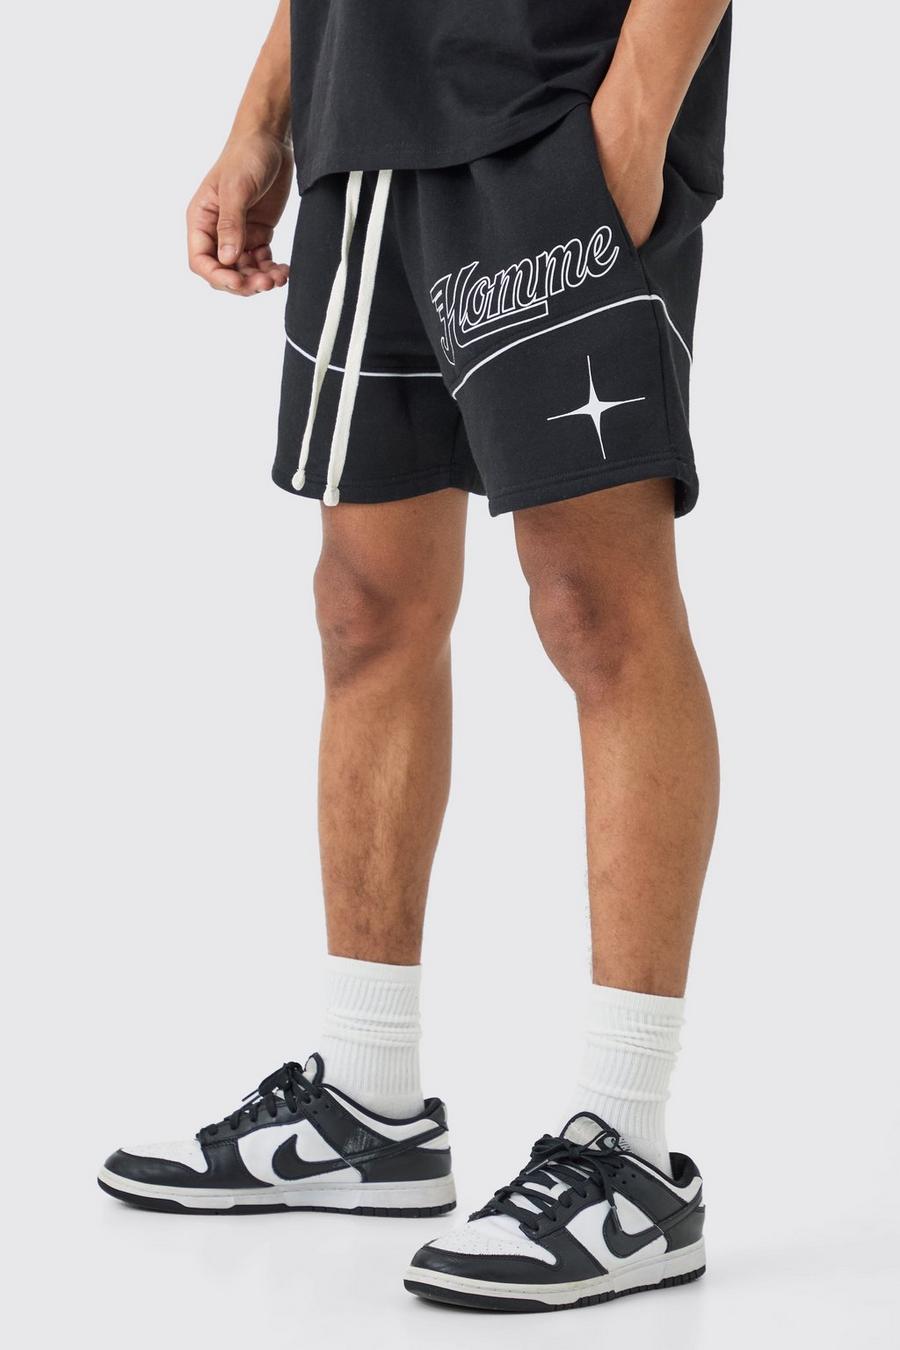 Men's Basketball Shorts, Active Running Shorts, Jersey Short, No Pockets-Black-XXL  